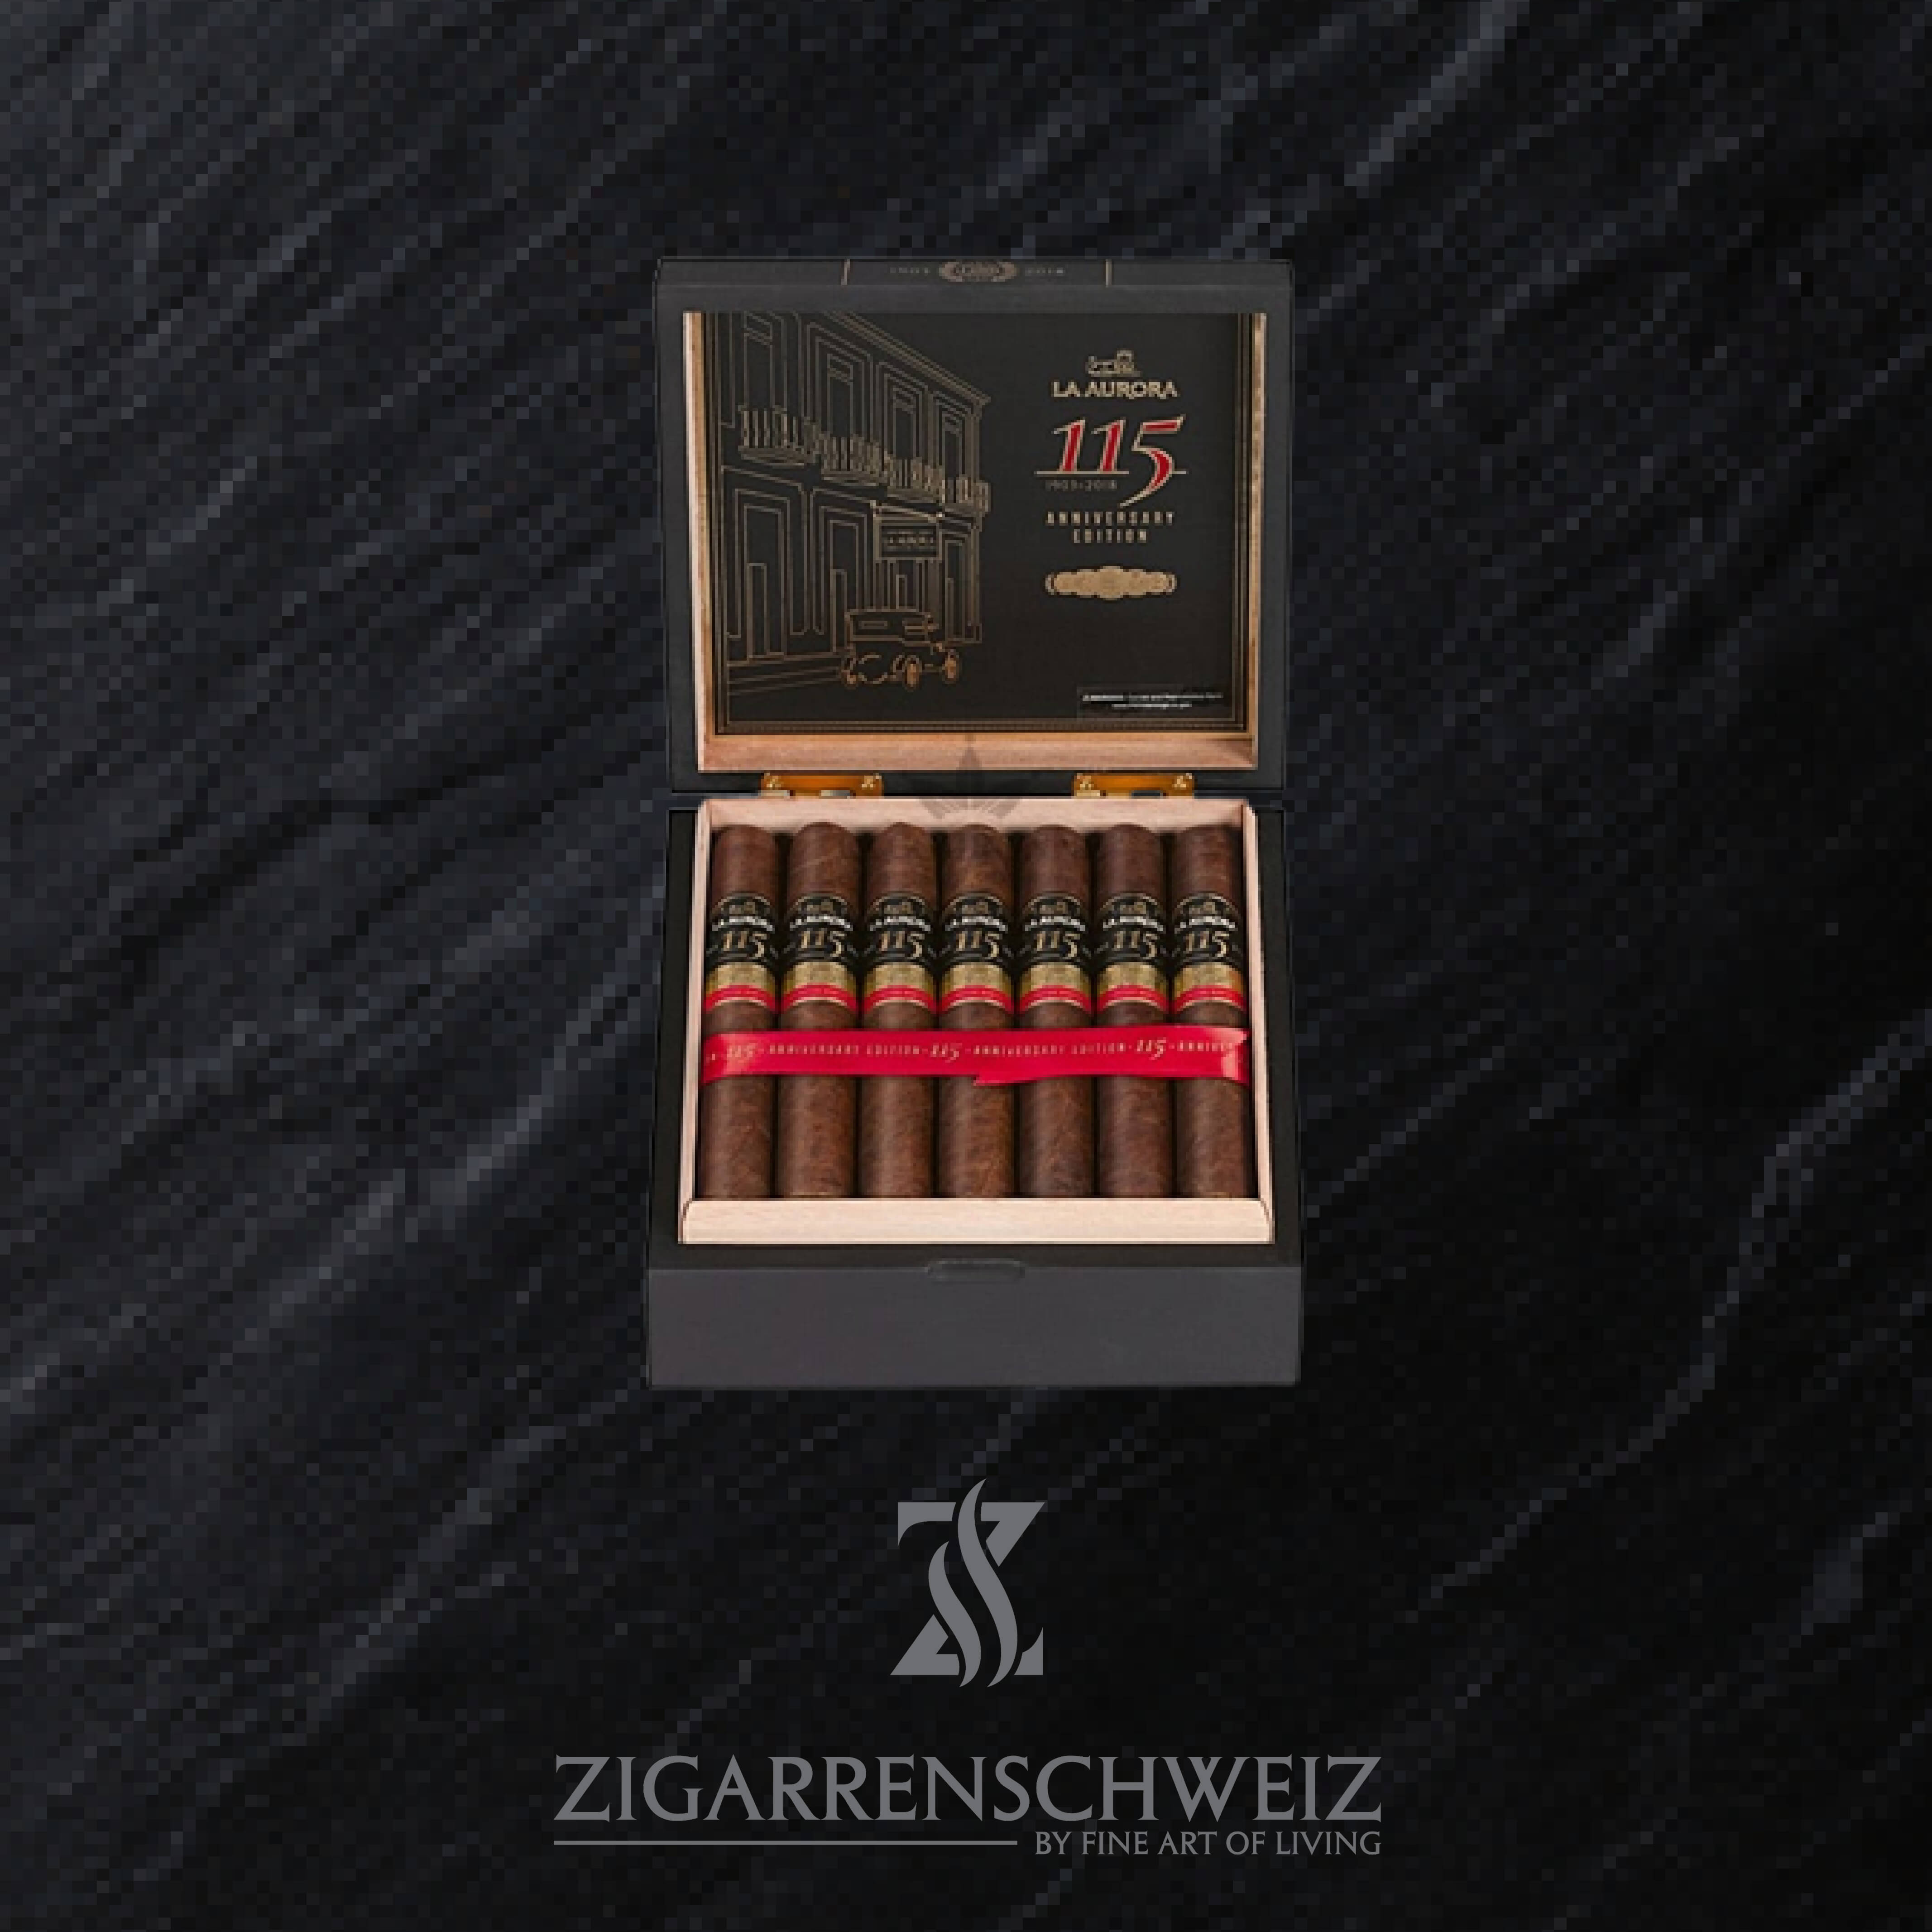 La Aurora 115 Anniversary Toro Zigarren Kiste geöffnet